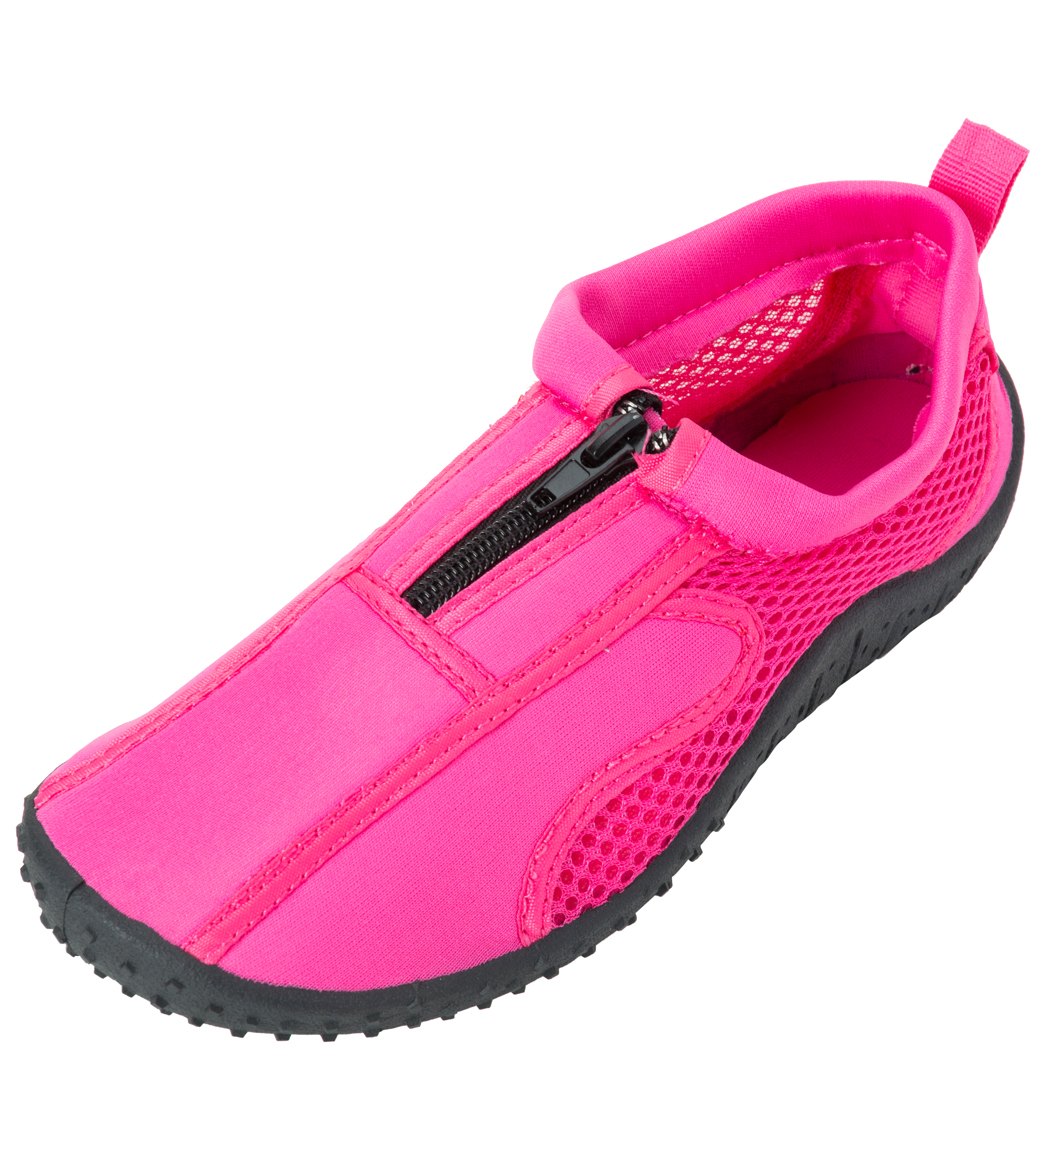 Rockin Footwear Kids' Aqua Neon Zipper Water Shoes at SwimOutlet.com